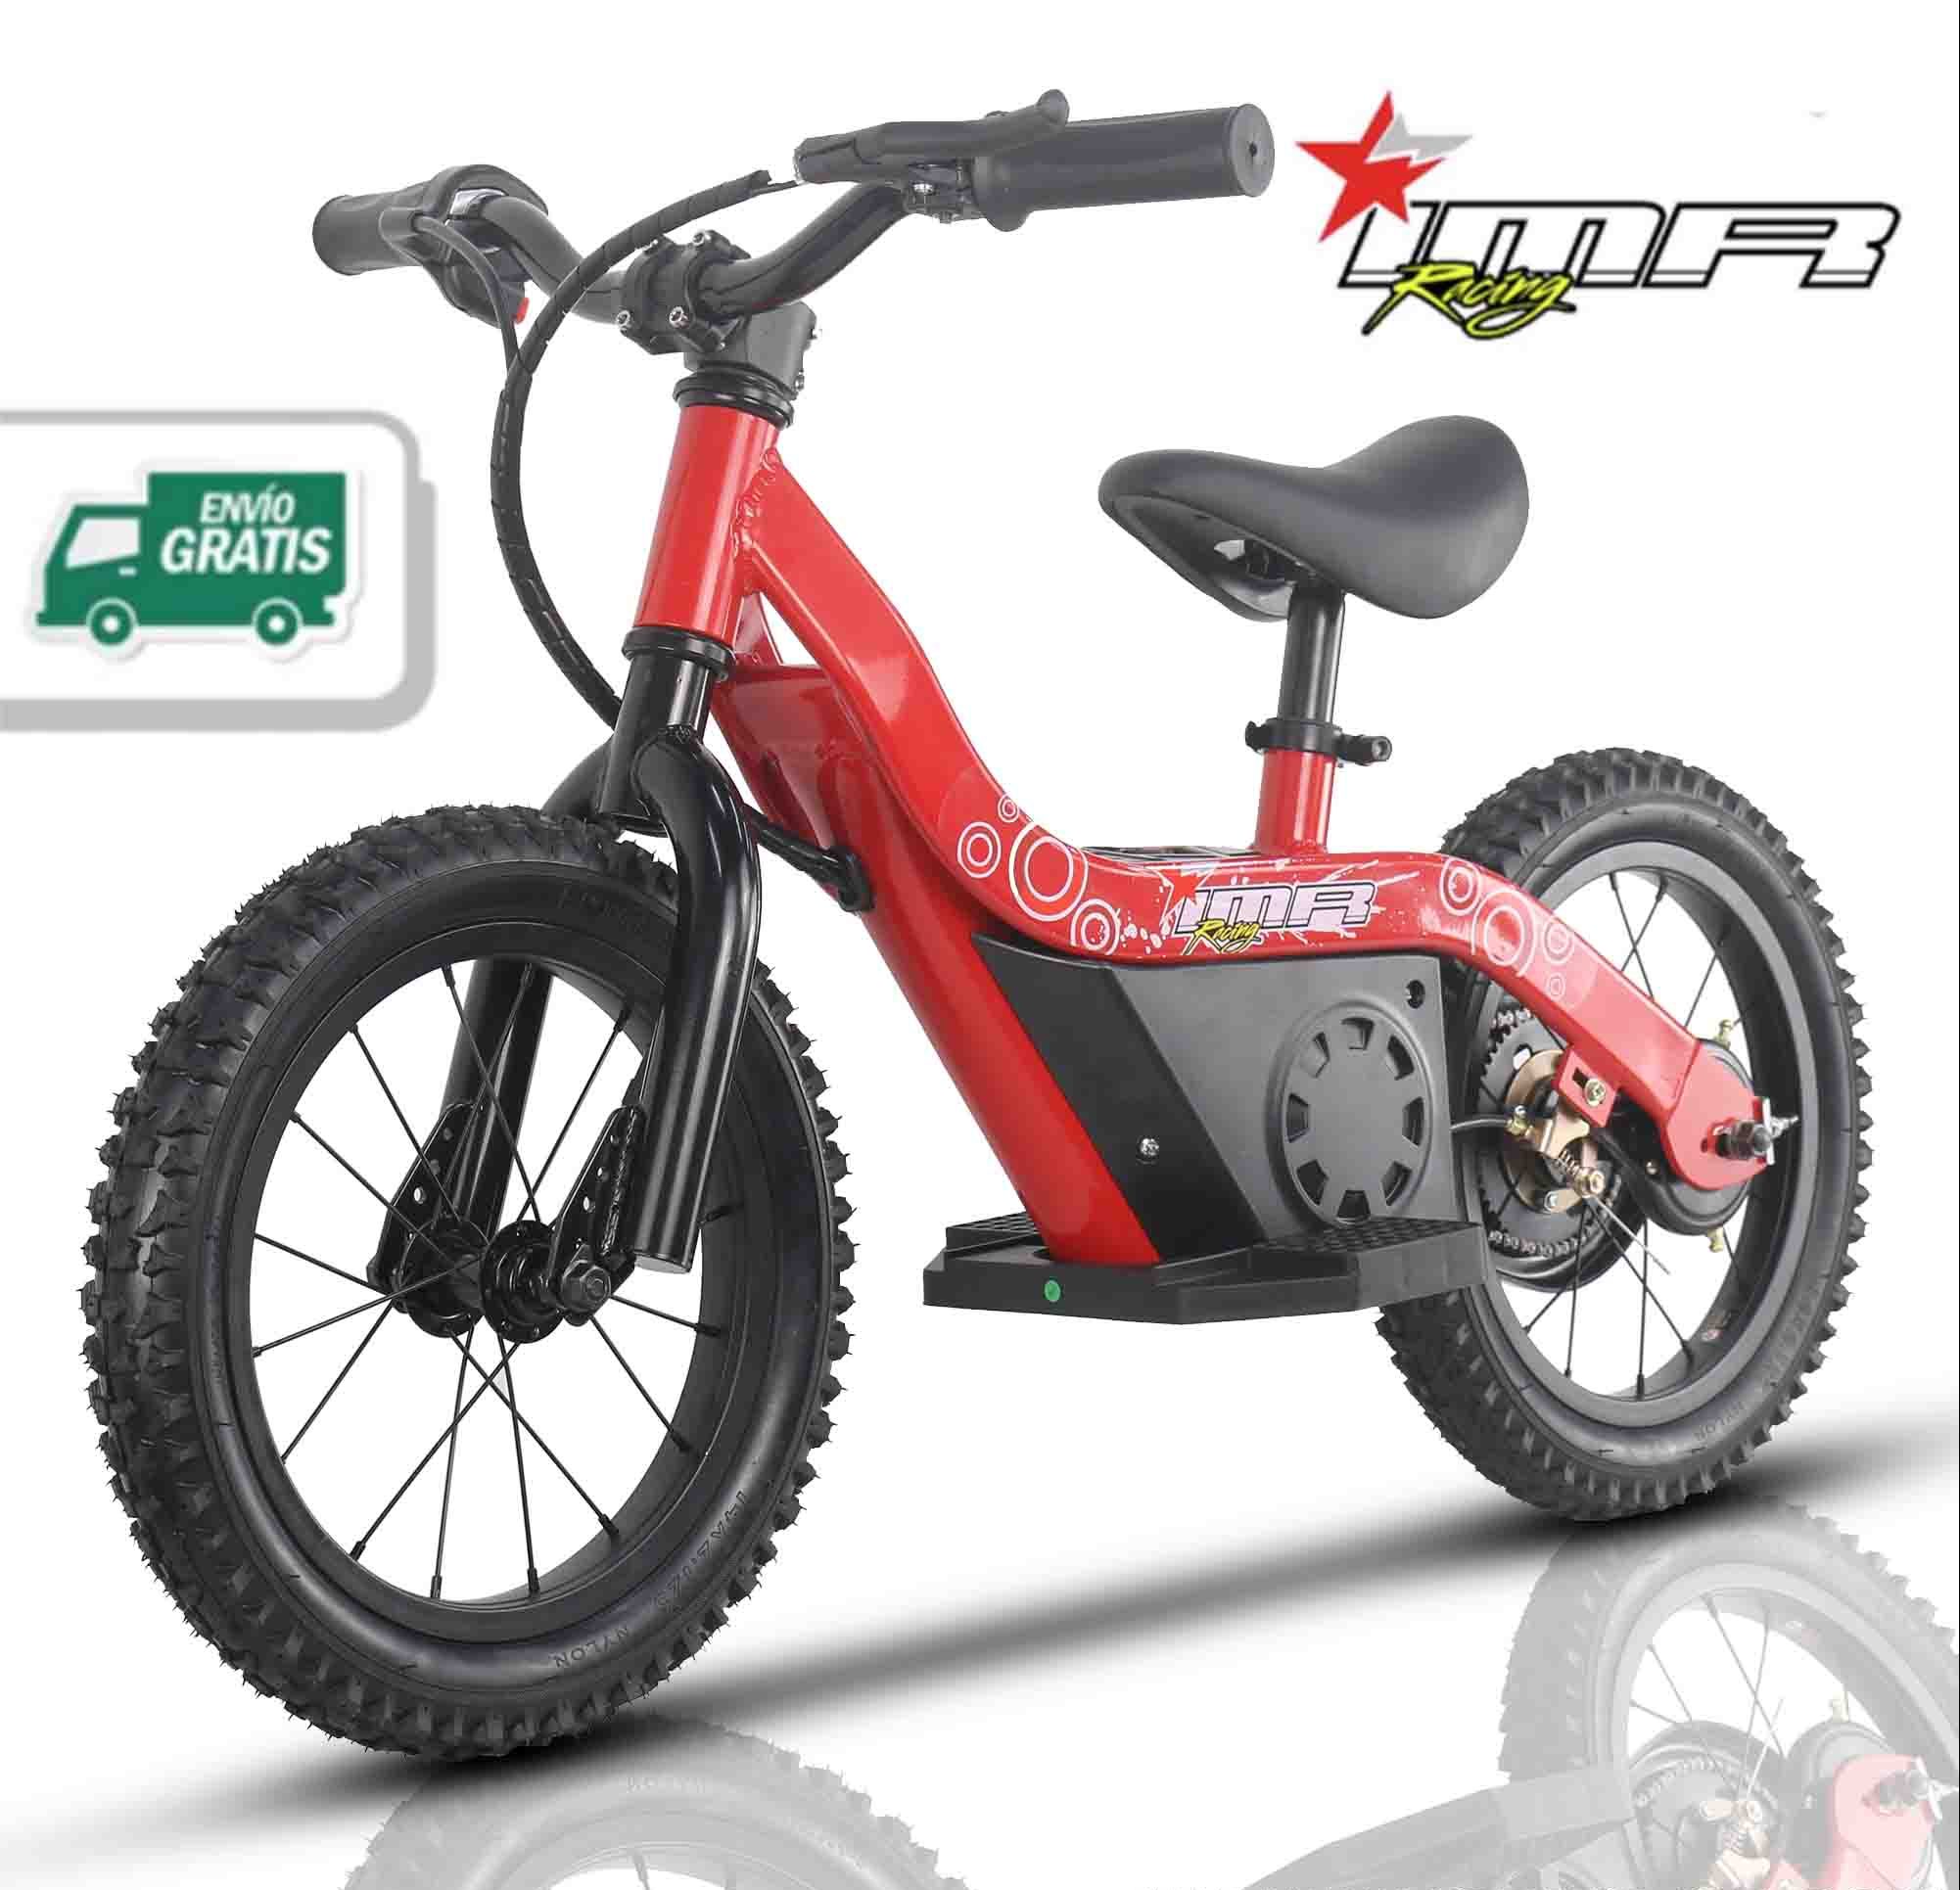 Bicicleta Eléctrica niño 100w Neón 12 Pulgadas - Sin Montar, Rojo